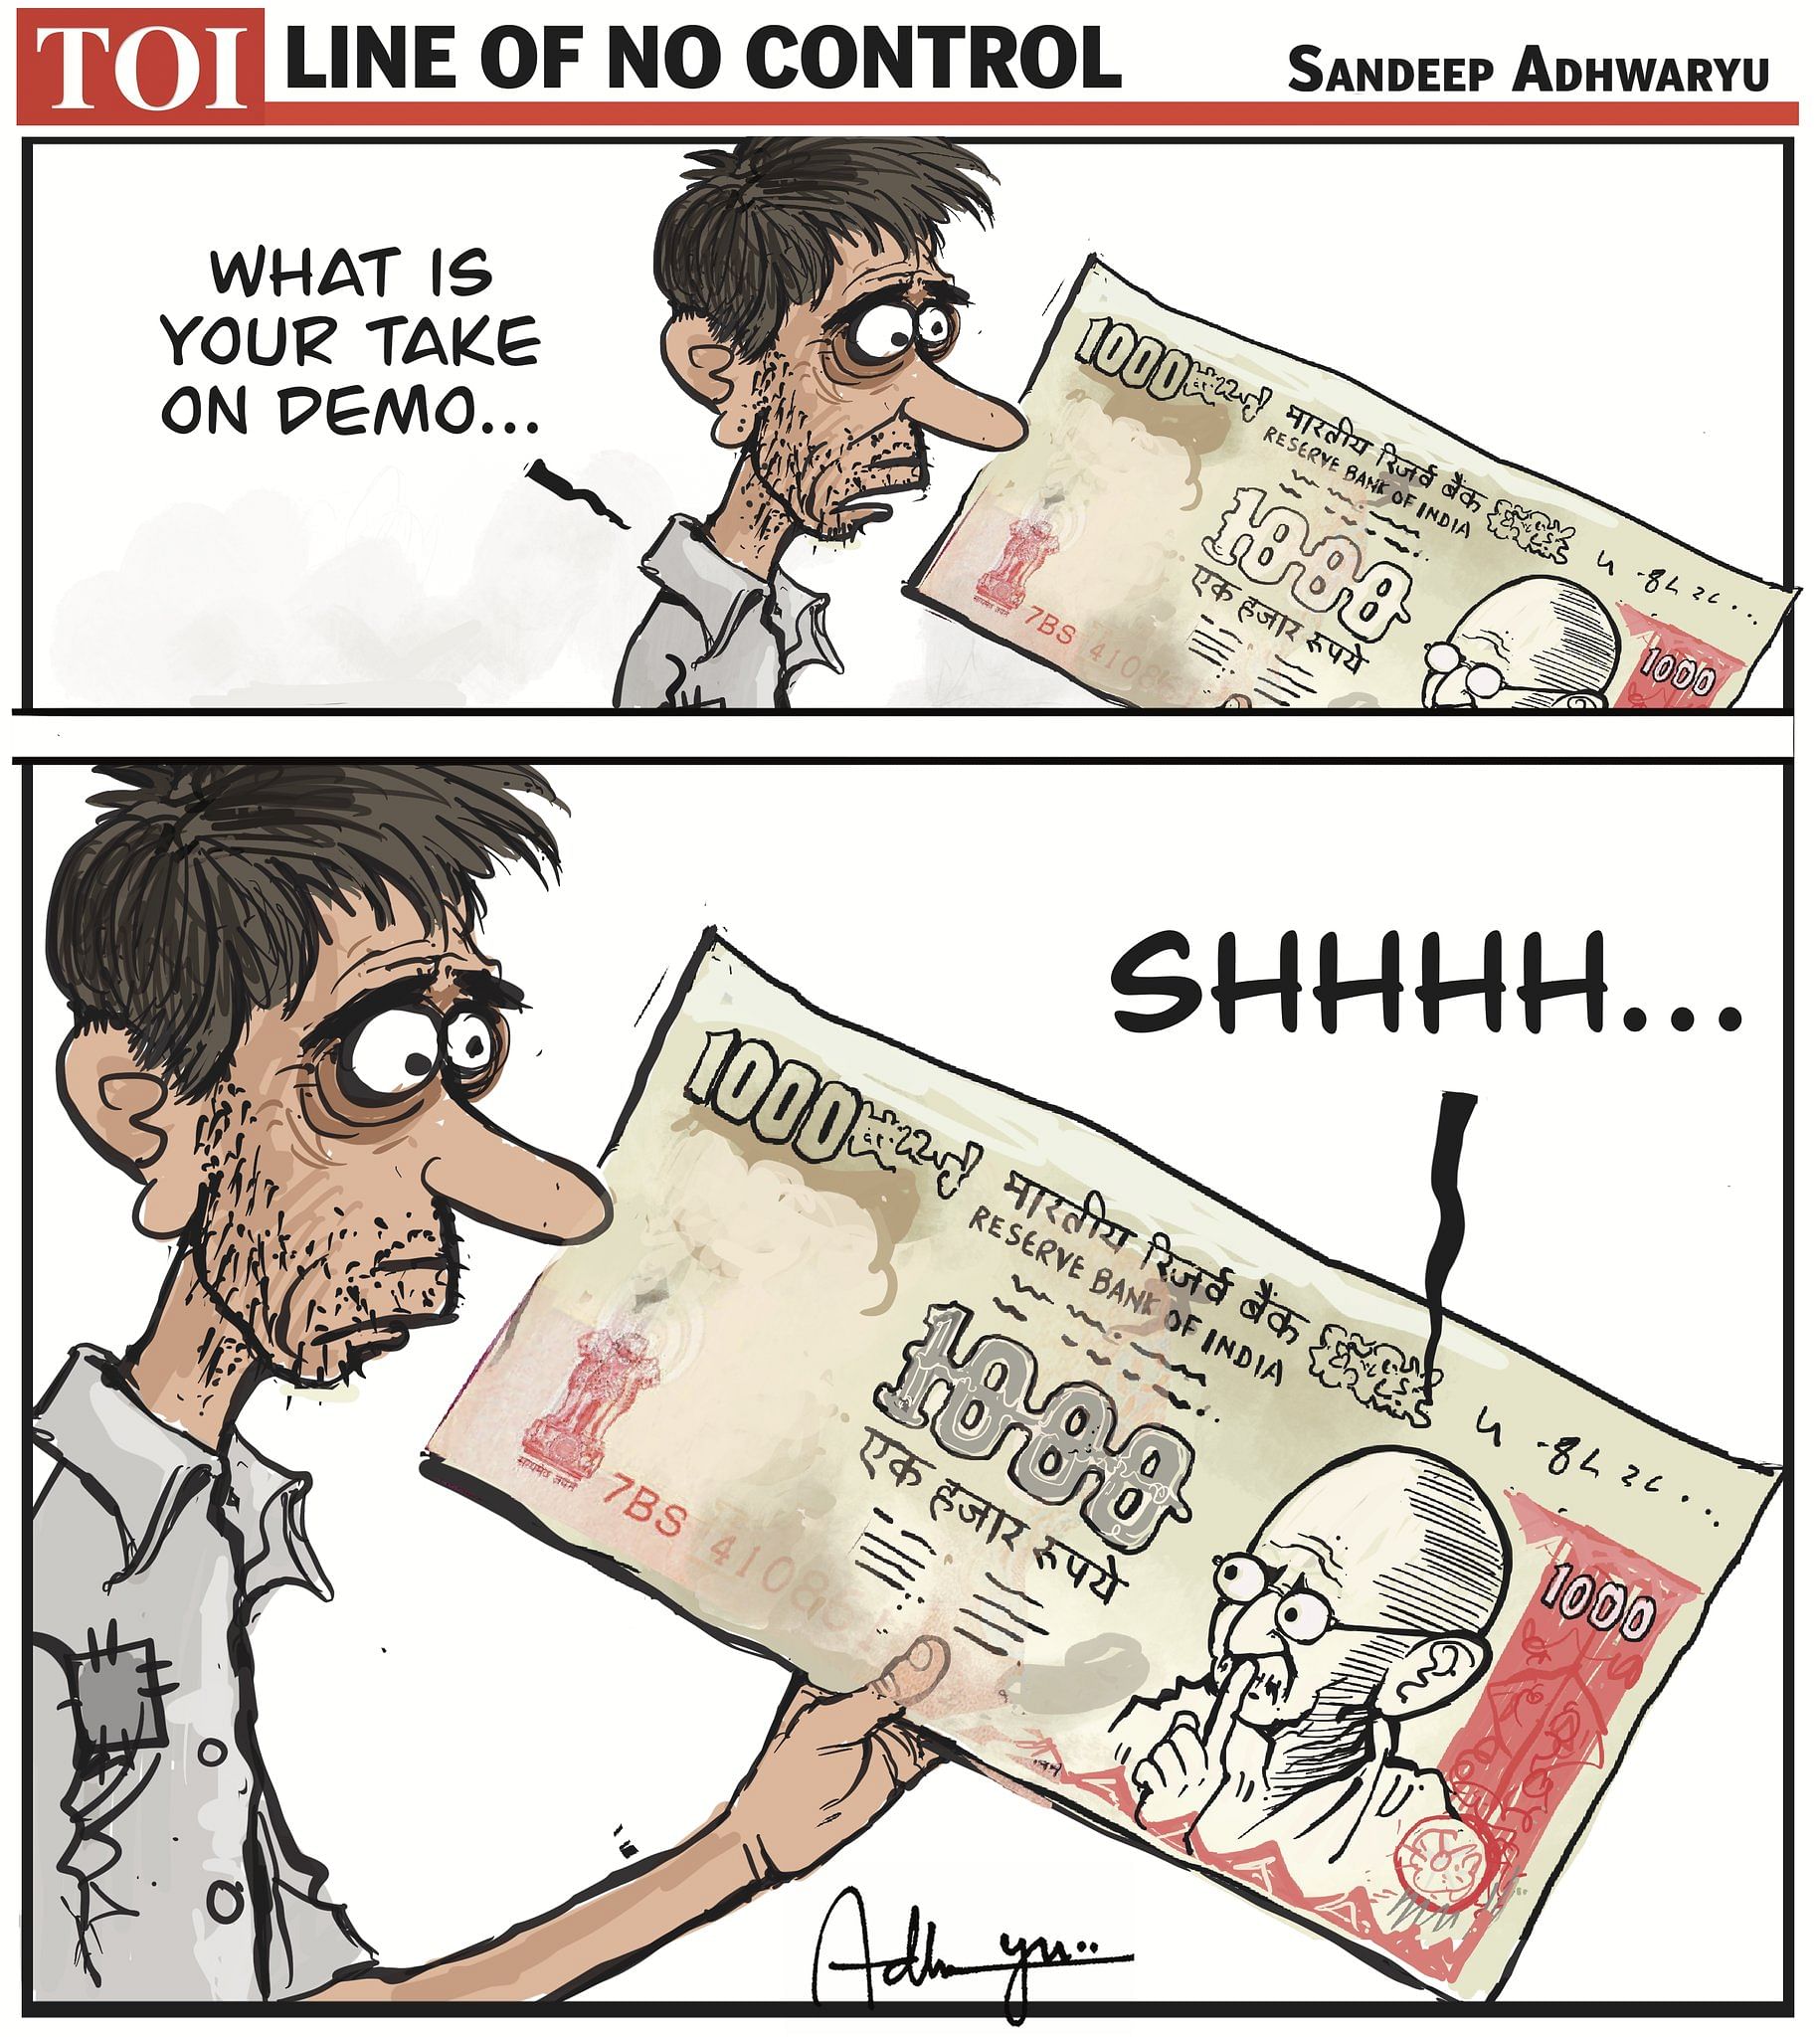 Sandeep Adhwaryu | The Times of India | Twitter /@CartoonistSan